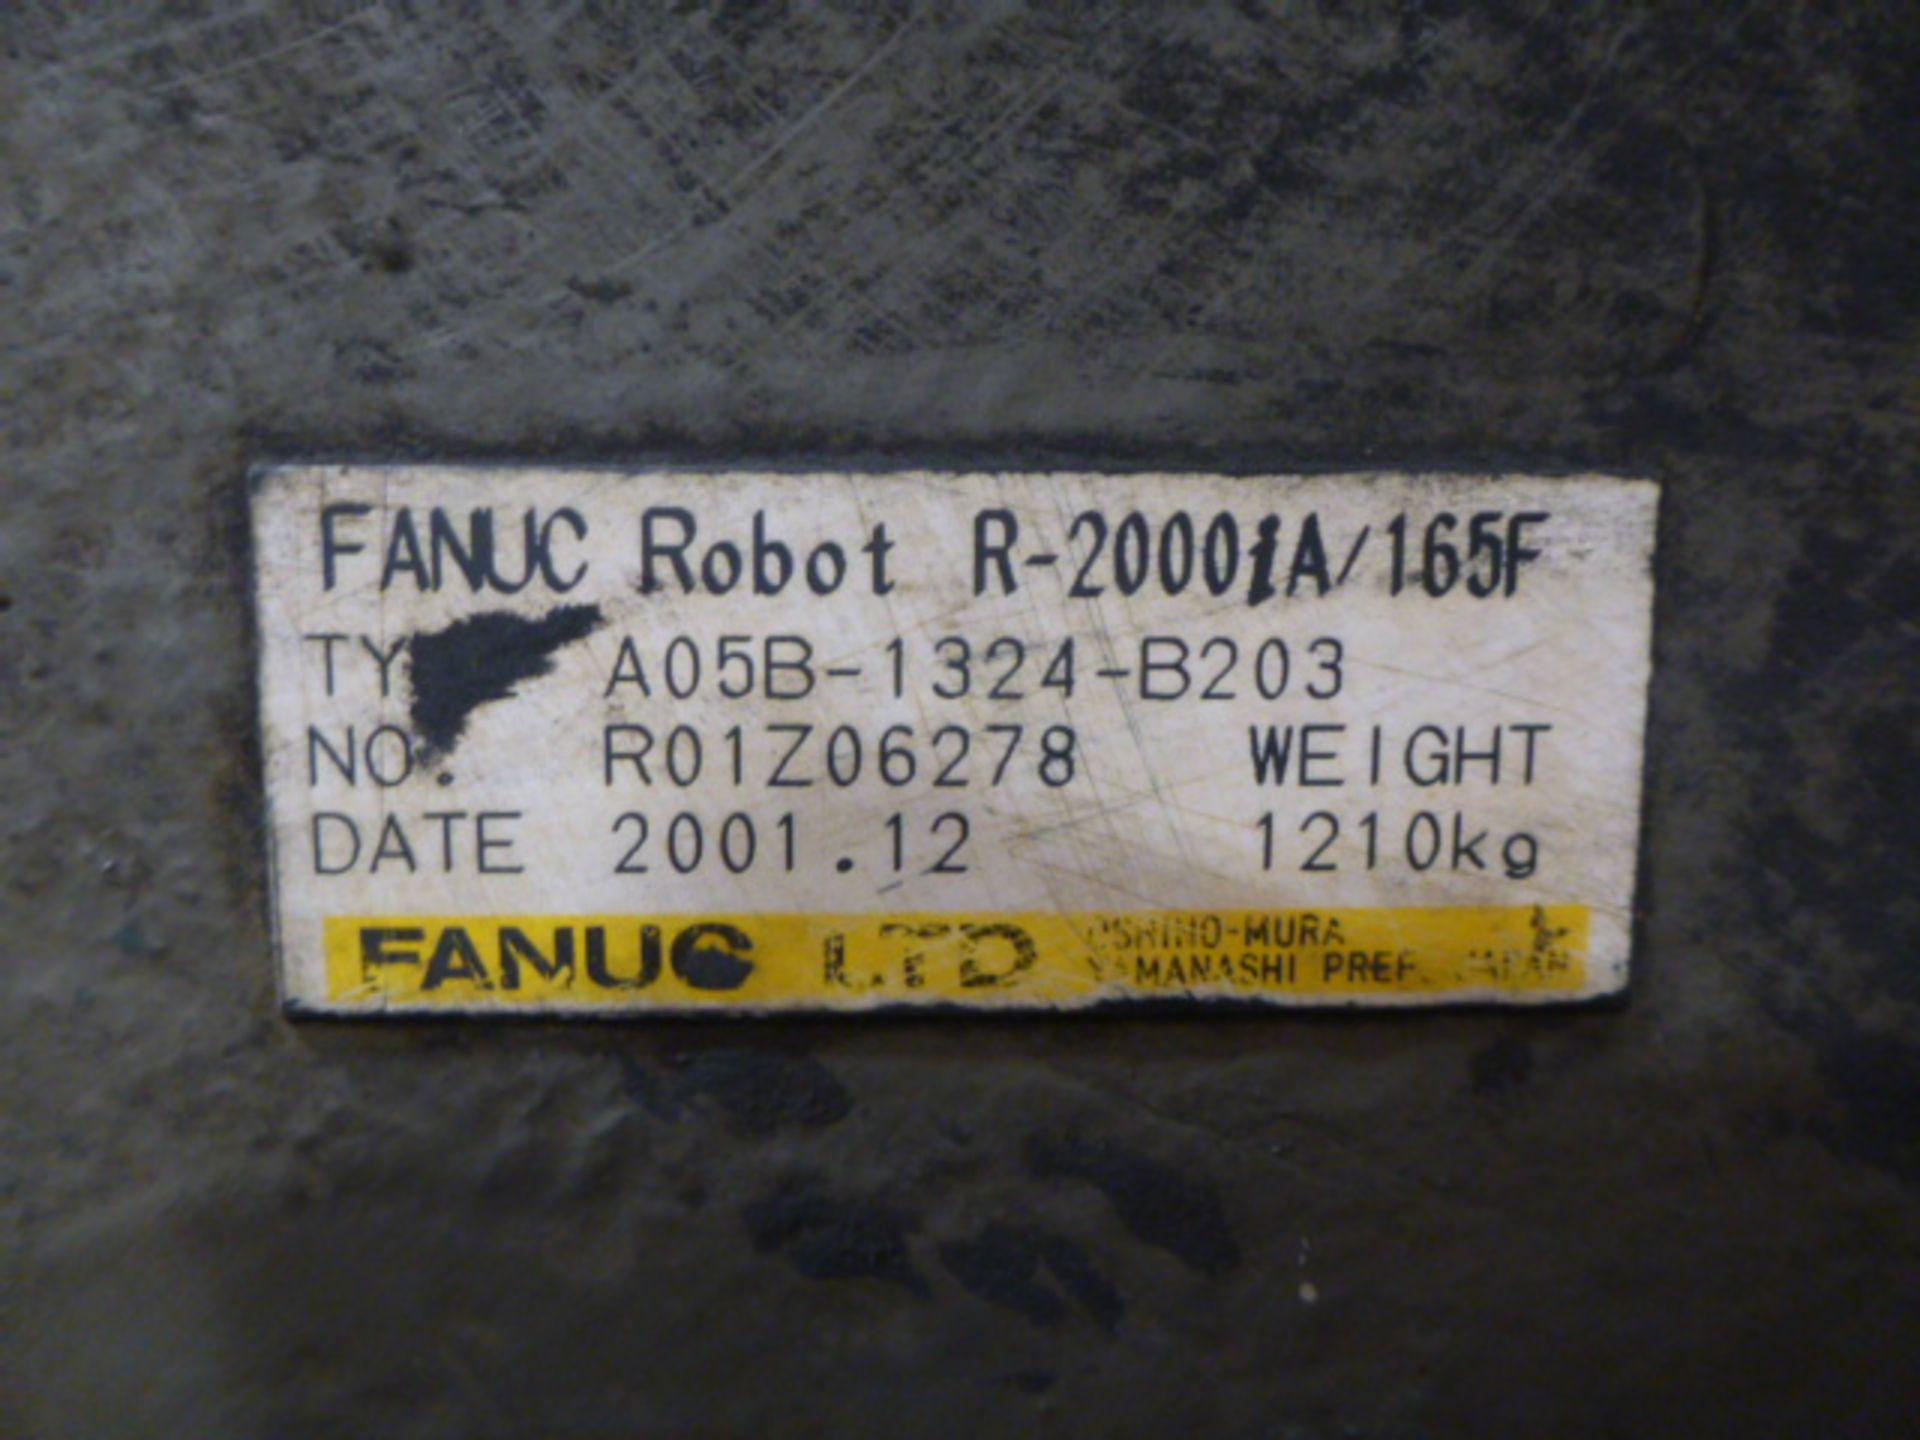 Fanuc R-2000iA Robotic Spot Welder (2001) FM03 - Image 3 of 7